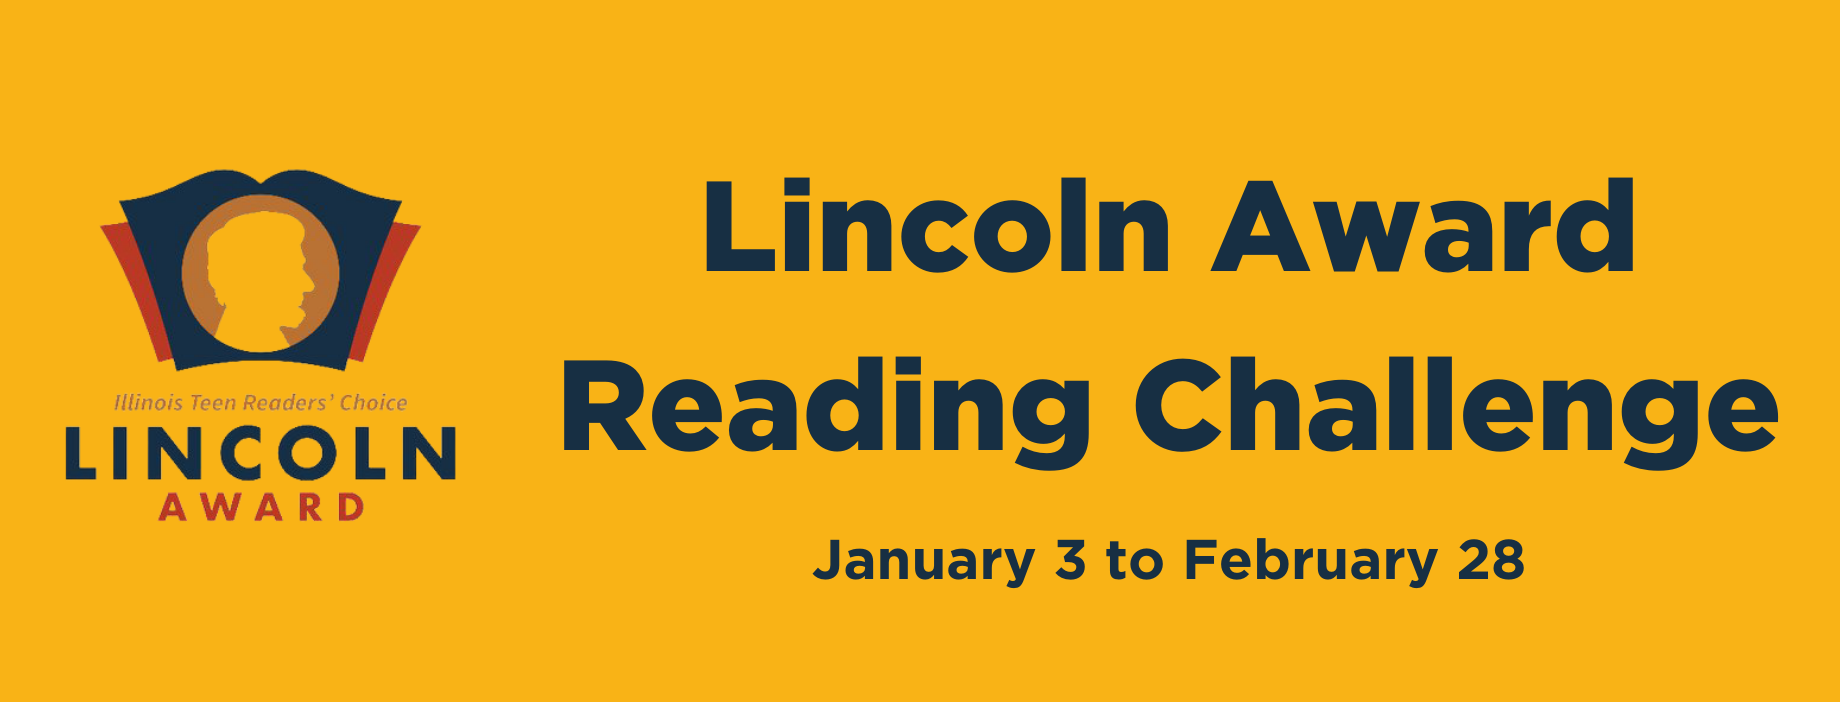 Lincoln Award Reading Challenge